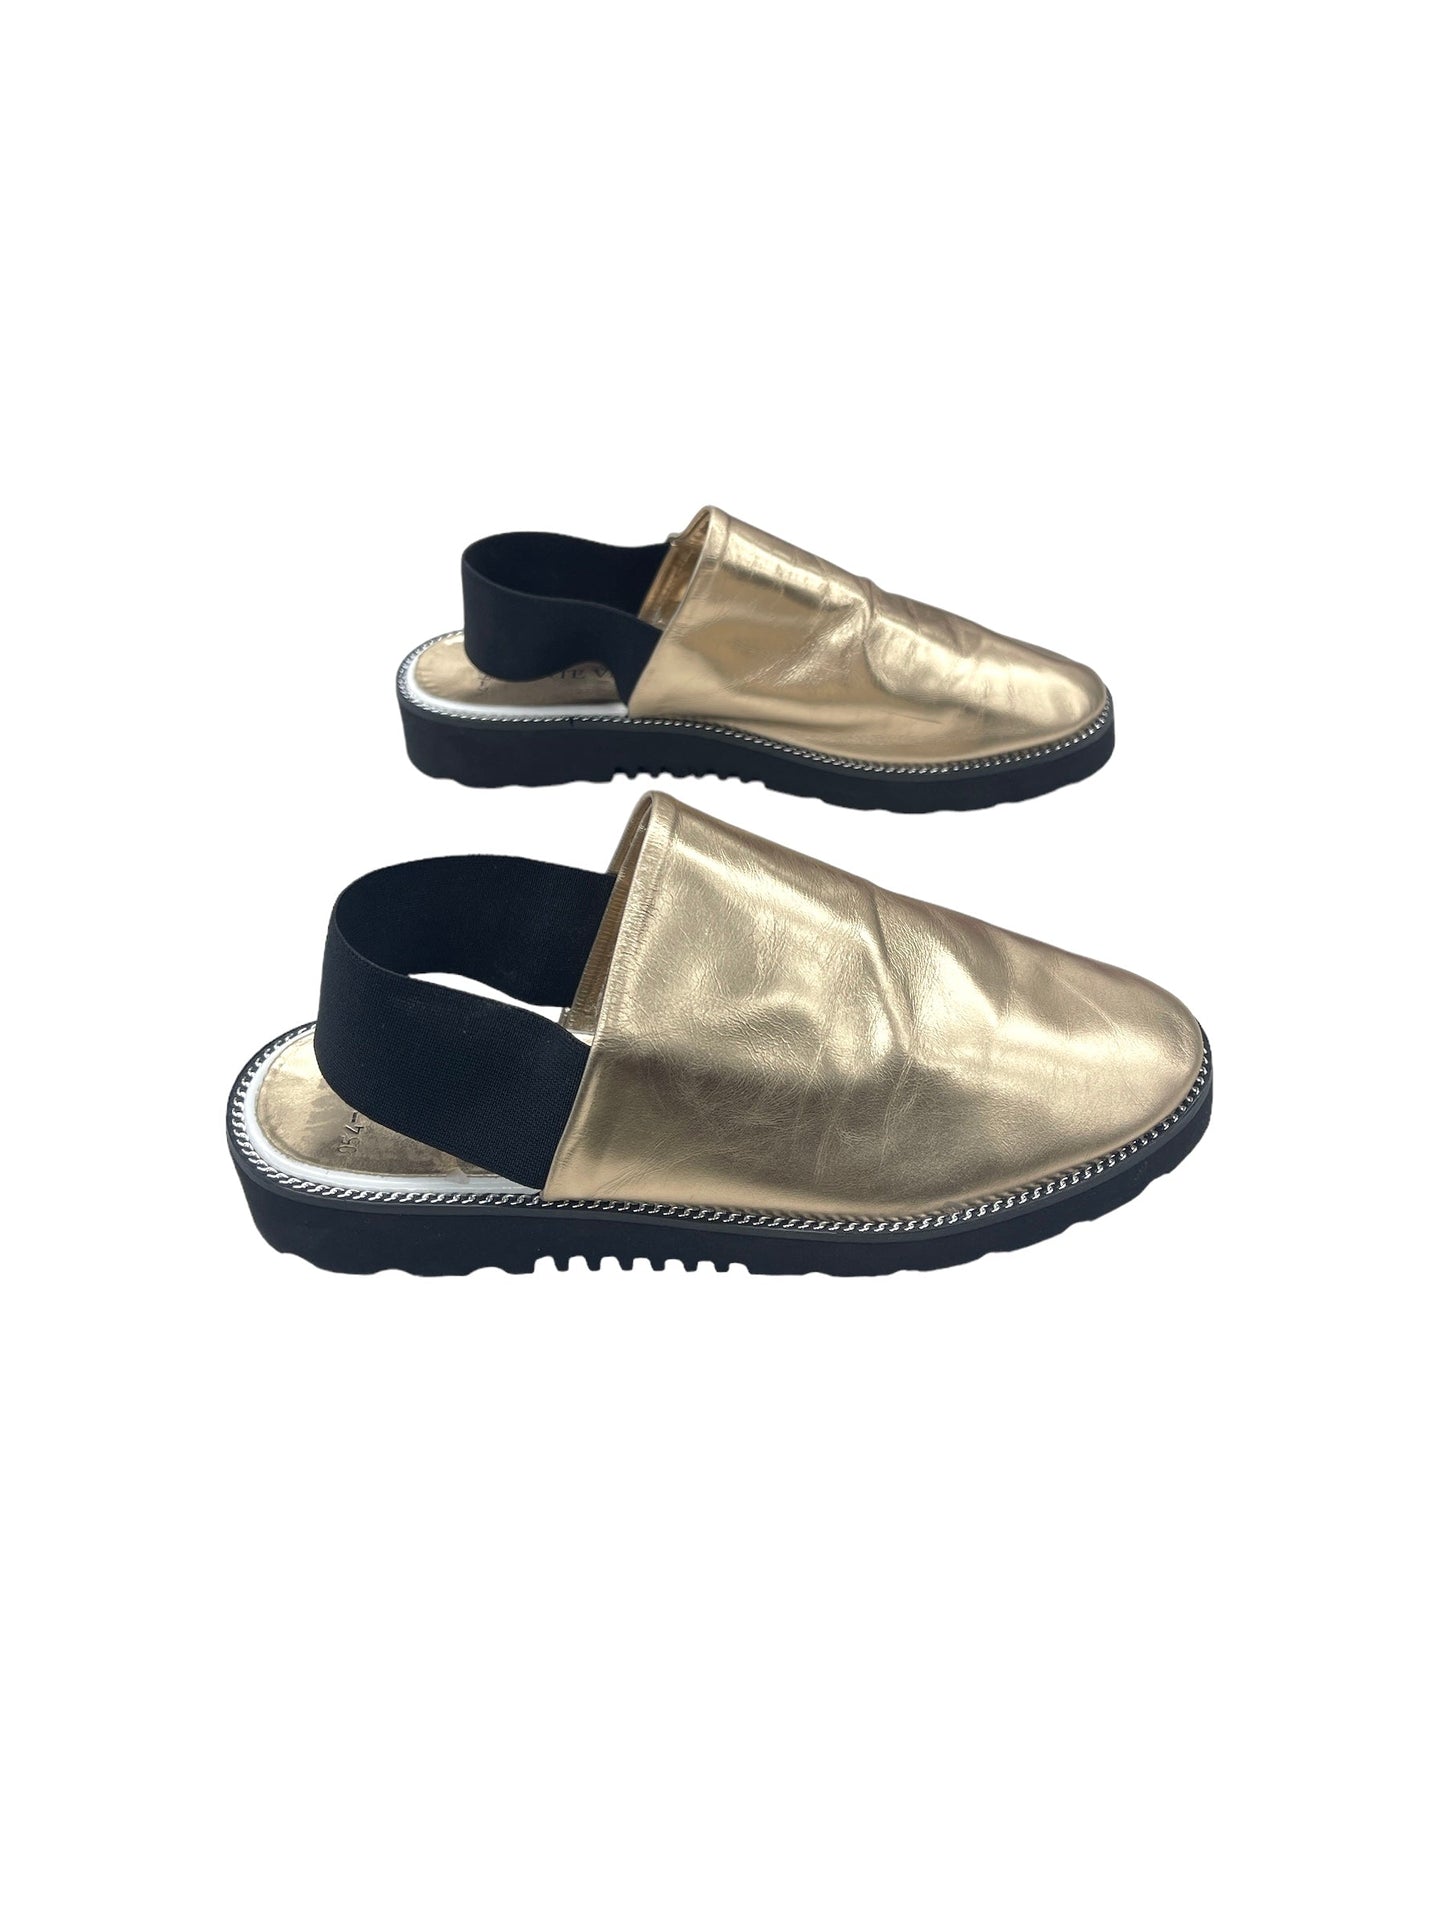 Gold Shoes Flats Mate Vaman, Size 6.5